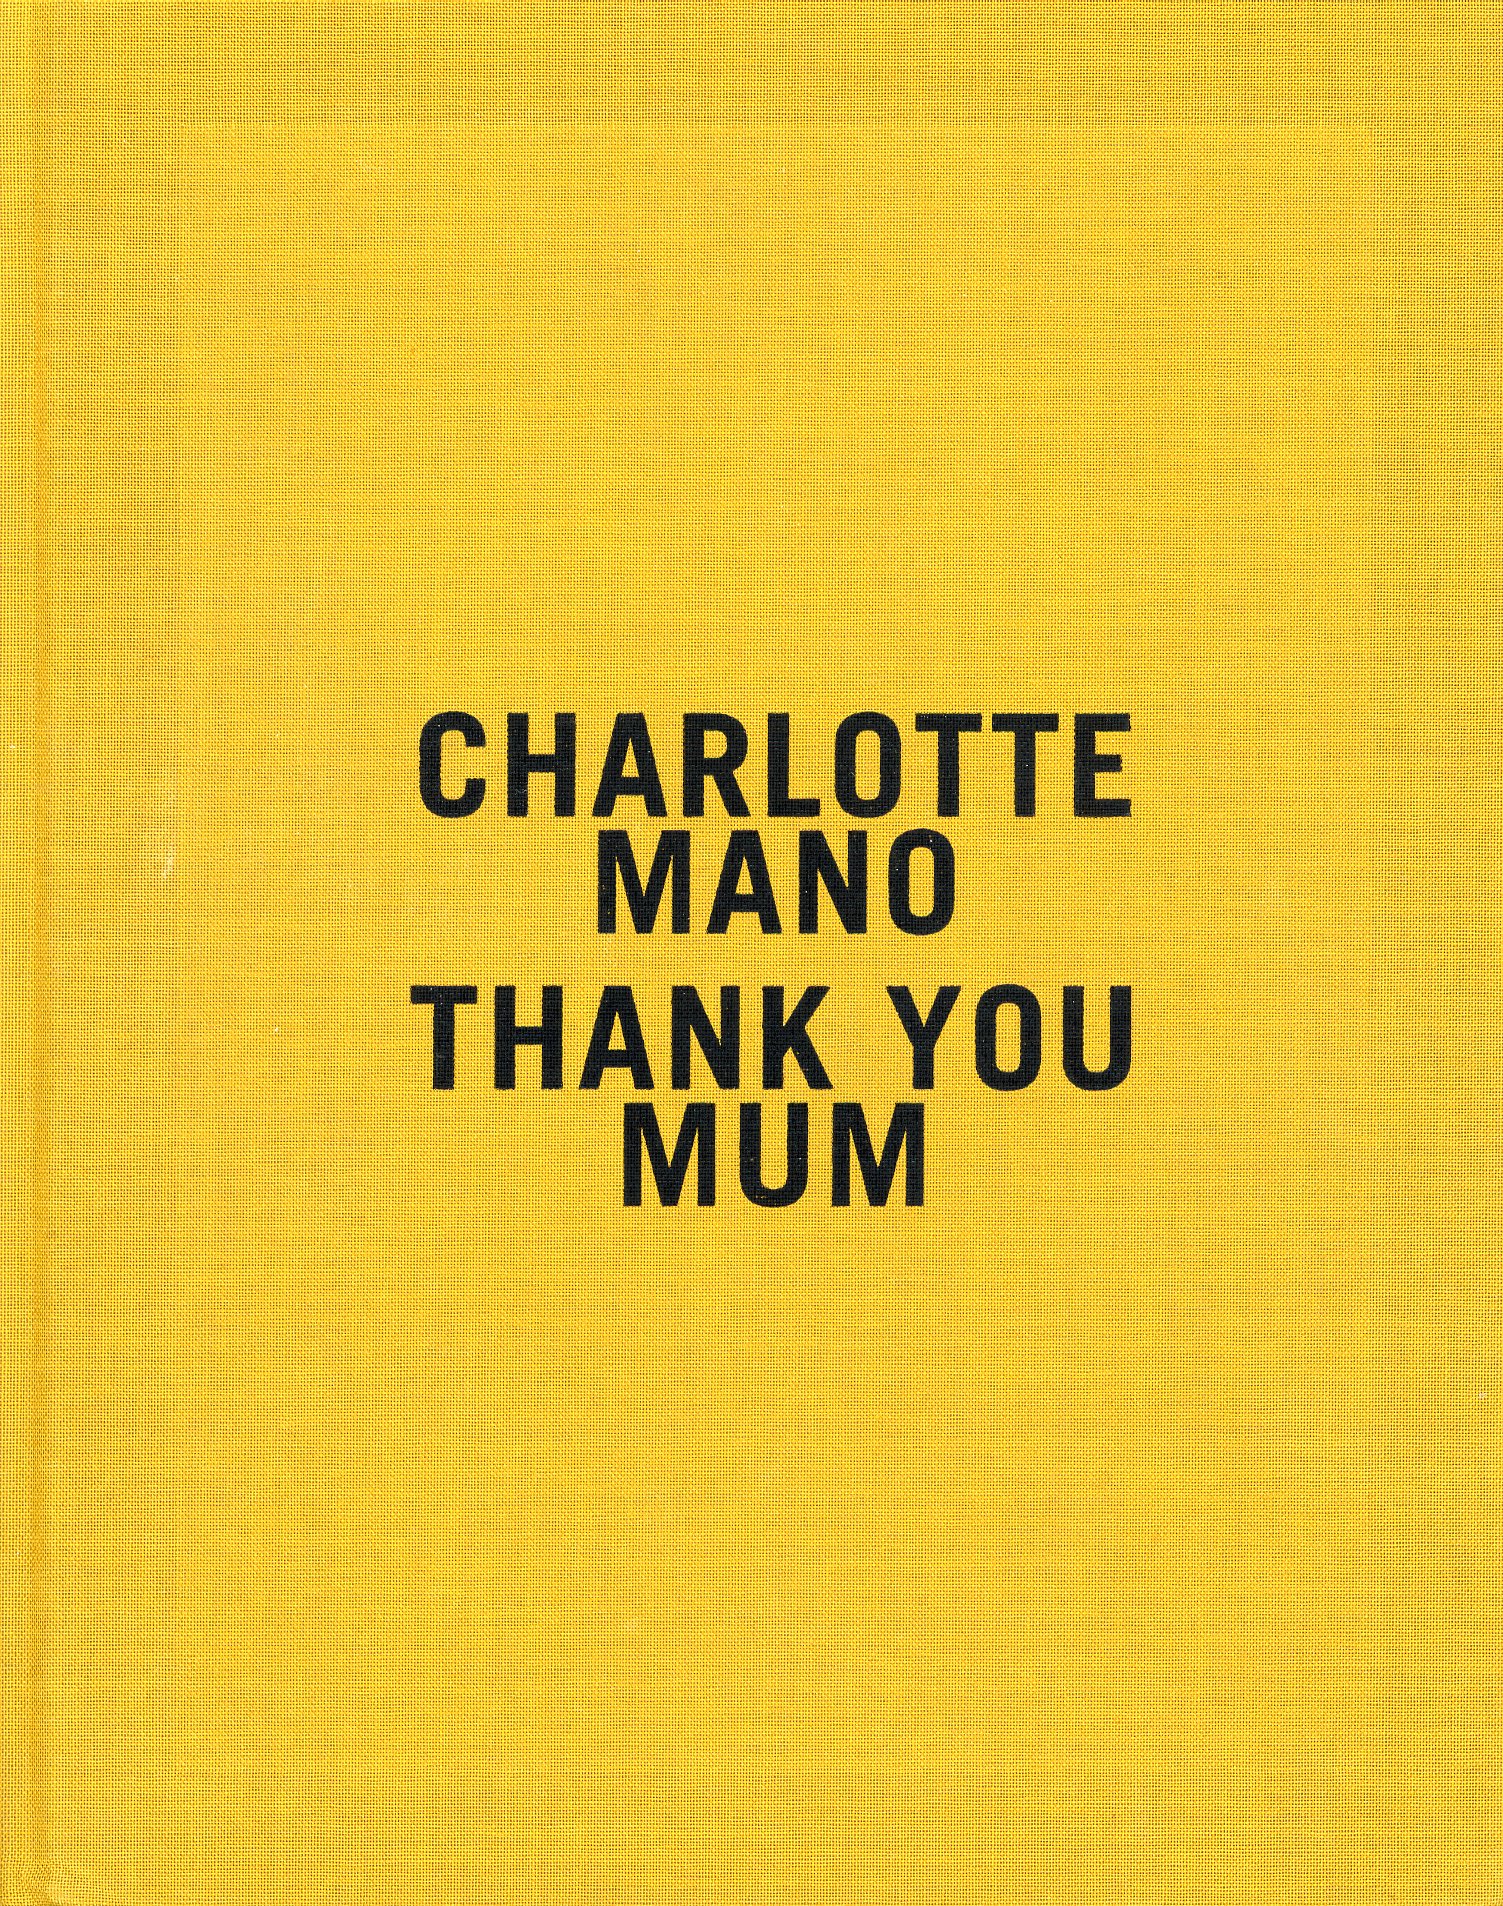 Thank You Mum, Charlotte Mano